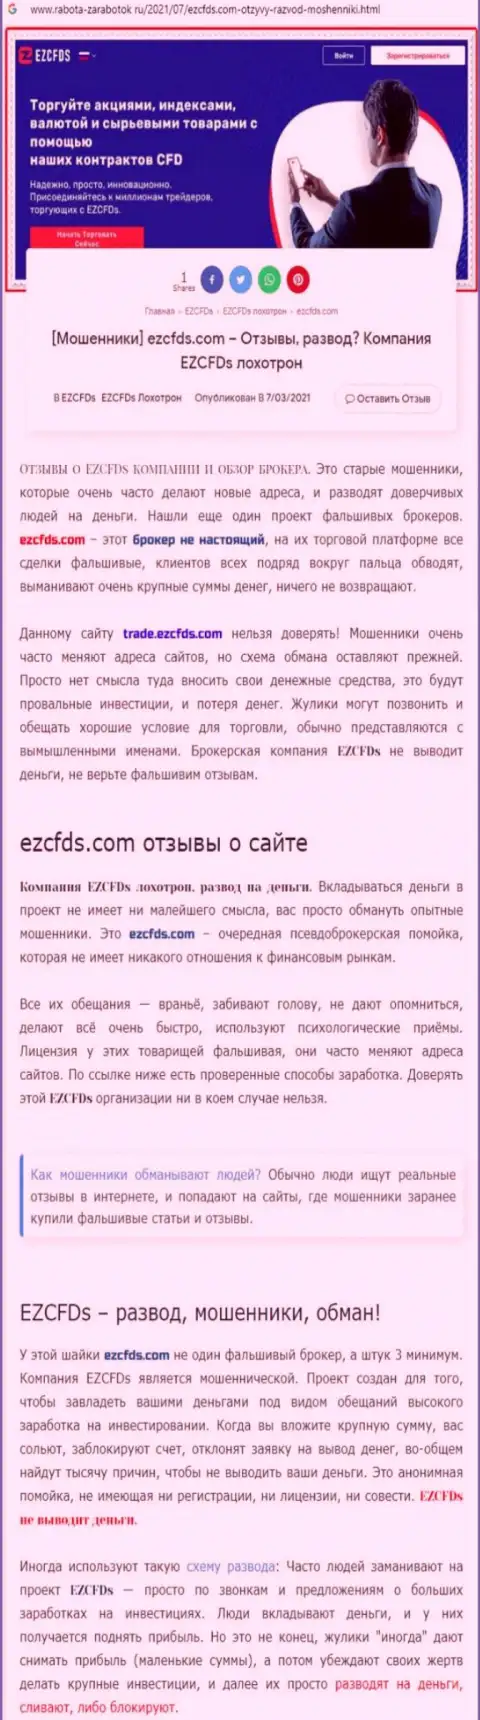 EZCFDS Com - это СКАМ и ЛОХОТРОН !!! (обзор мошеннических деяний организации)